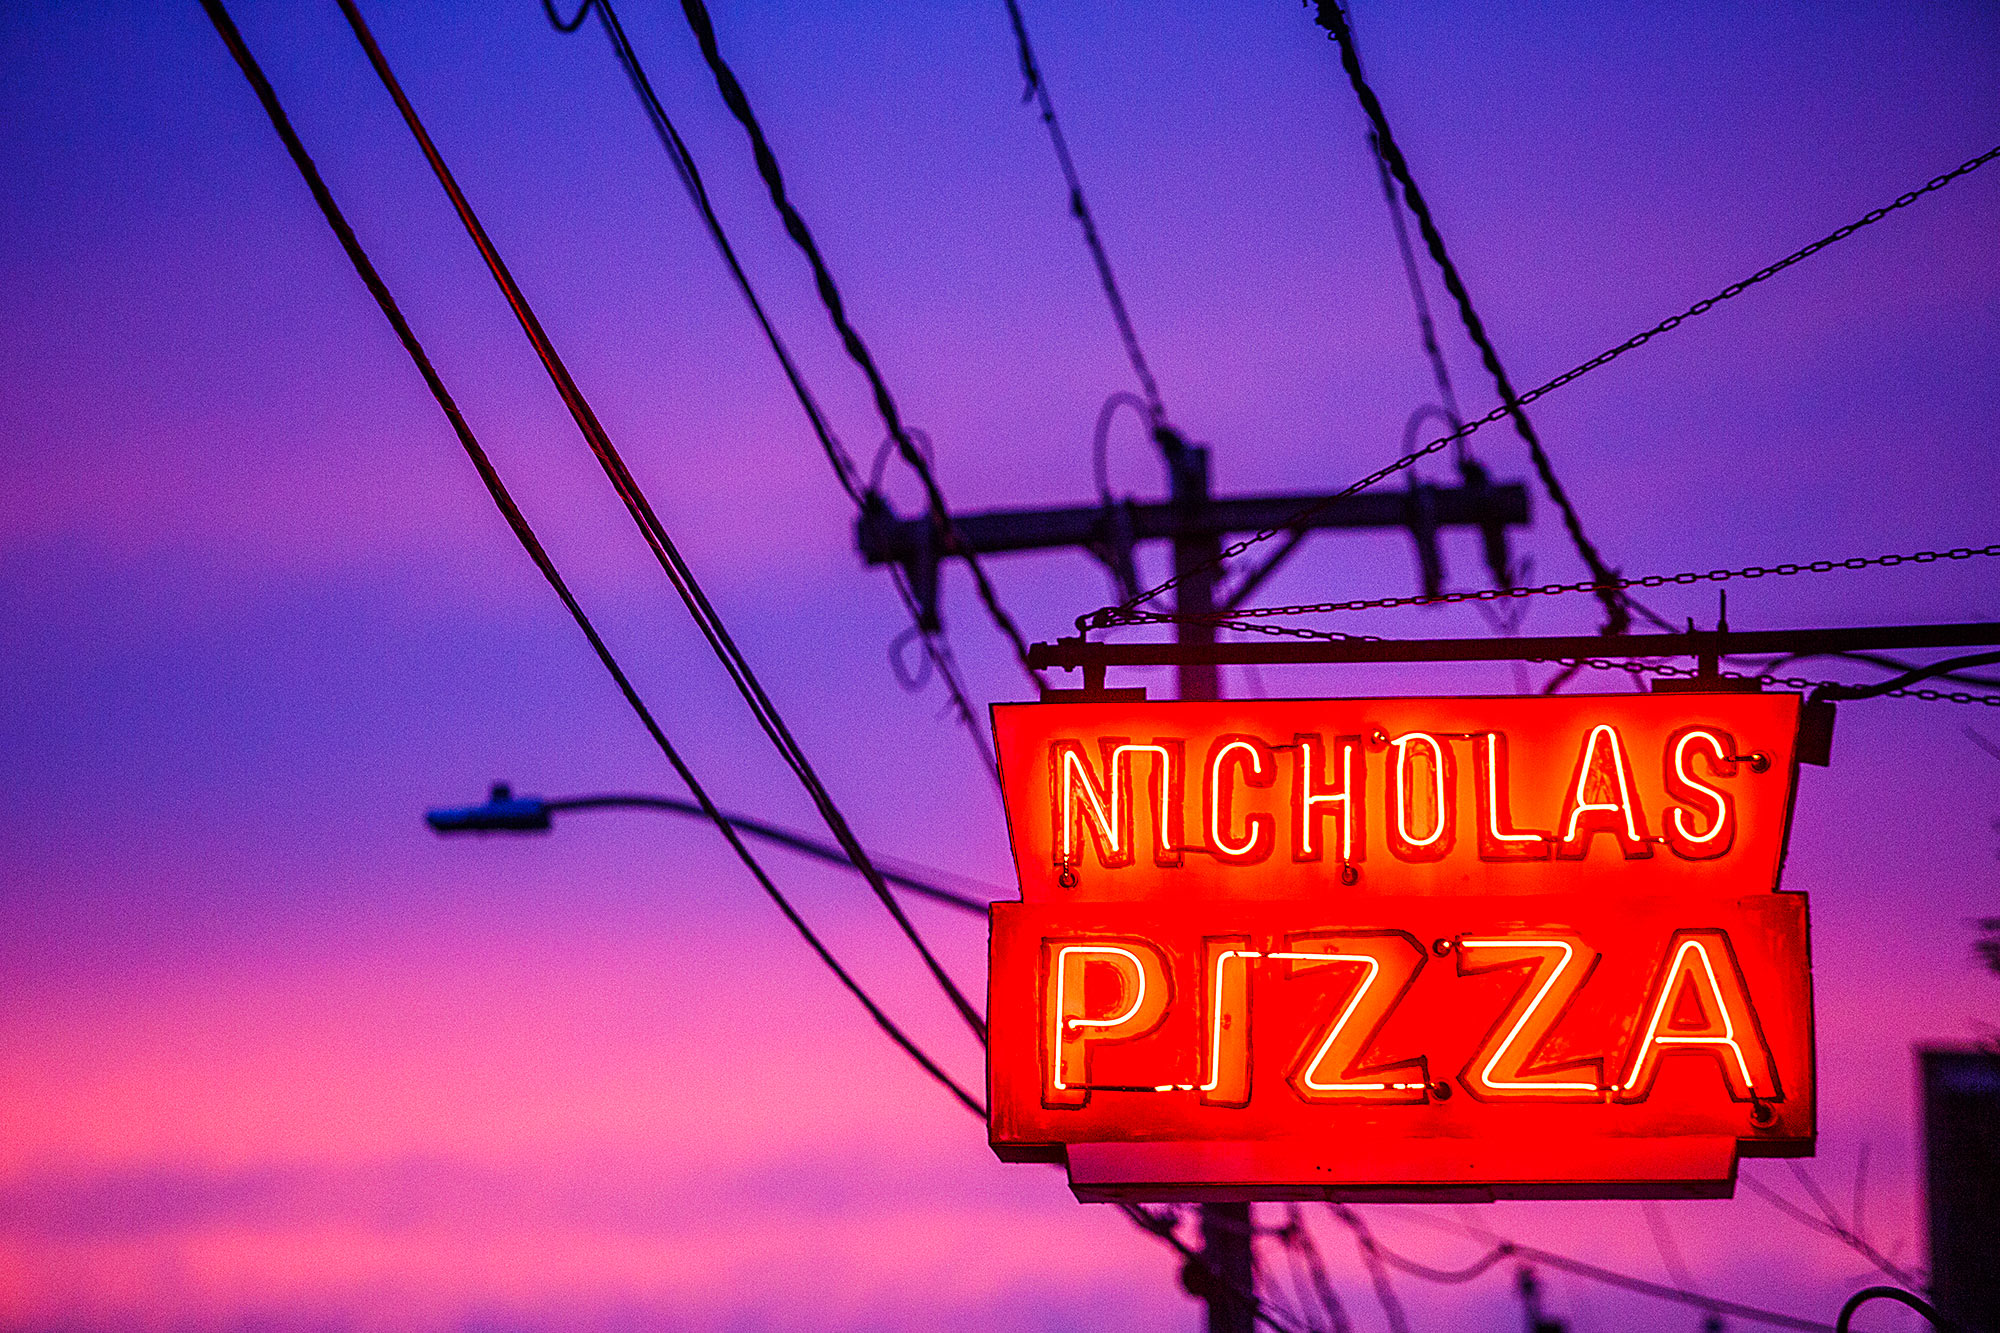 Nicholas Pizza, Torrington, CT - 2/4